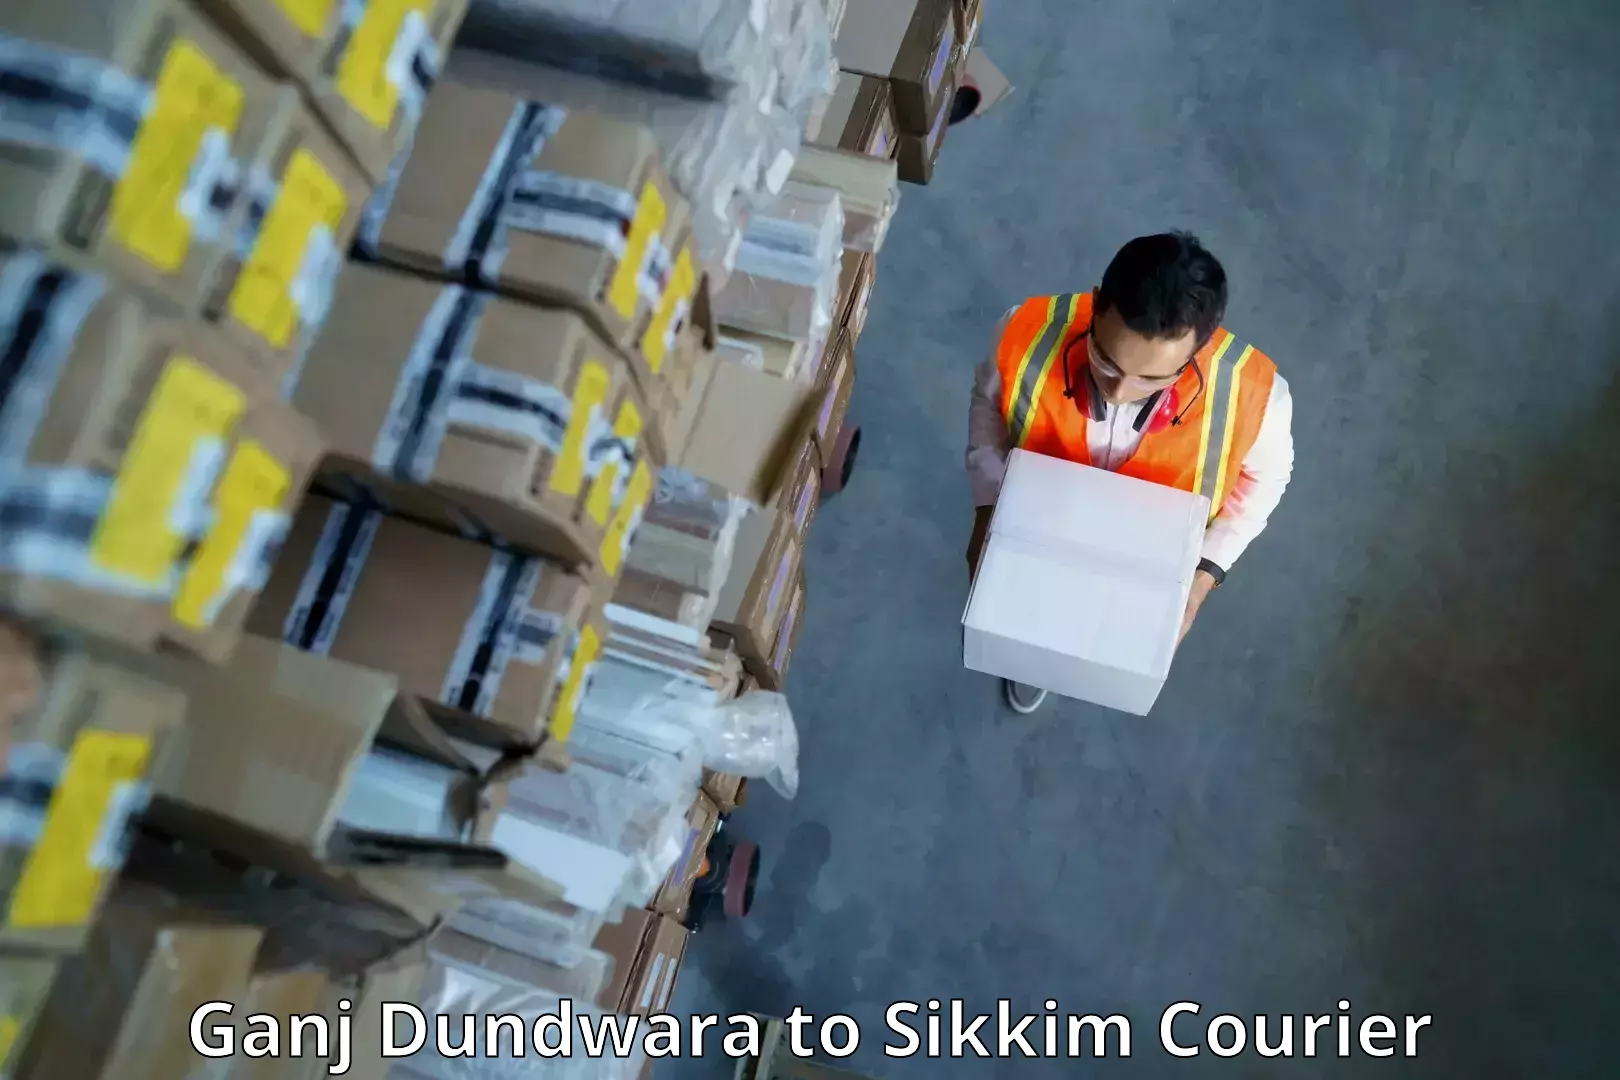 Urgent courier needs Ganj Dundwara to Sikkim